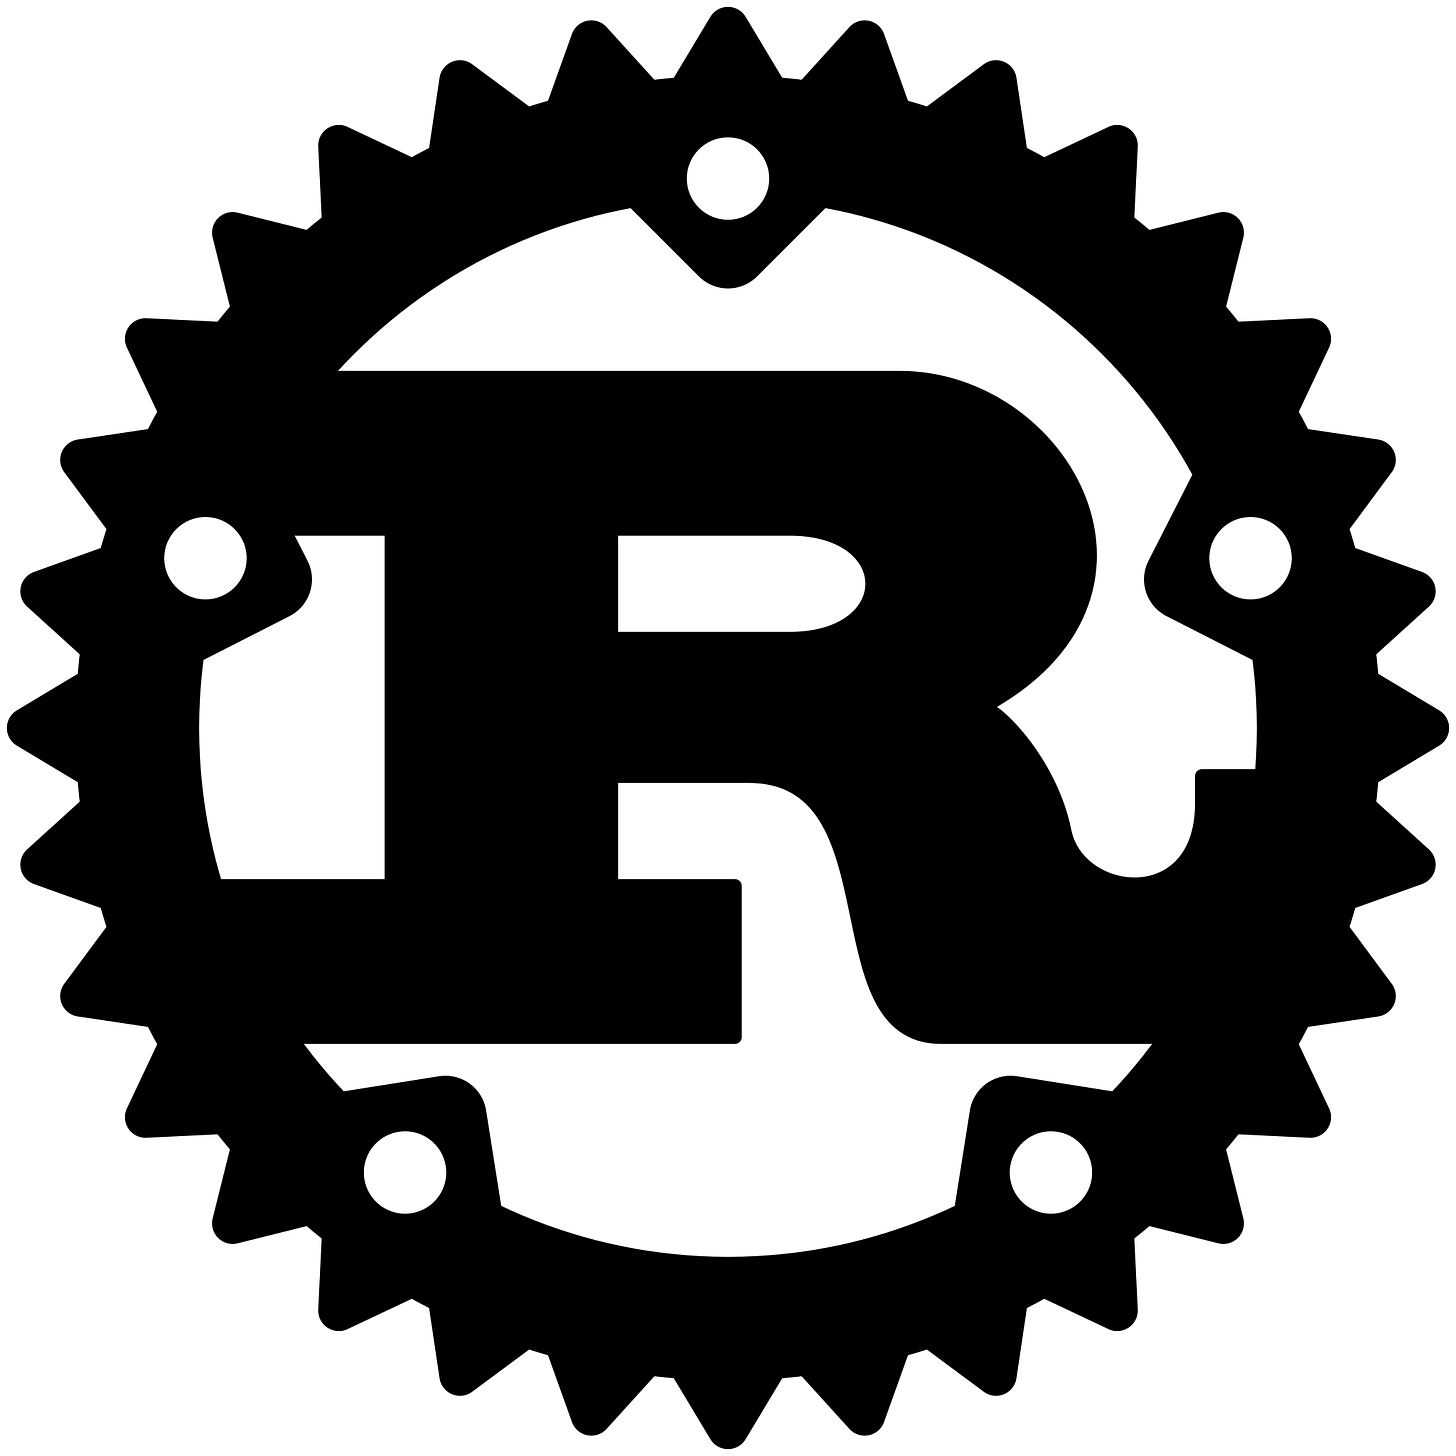 File:Rust programming language black logo.svg - Wikipedia